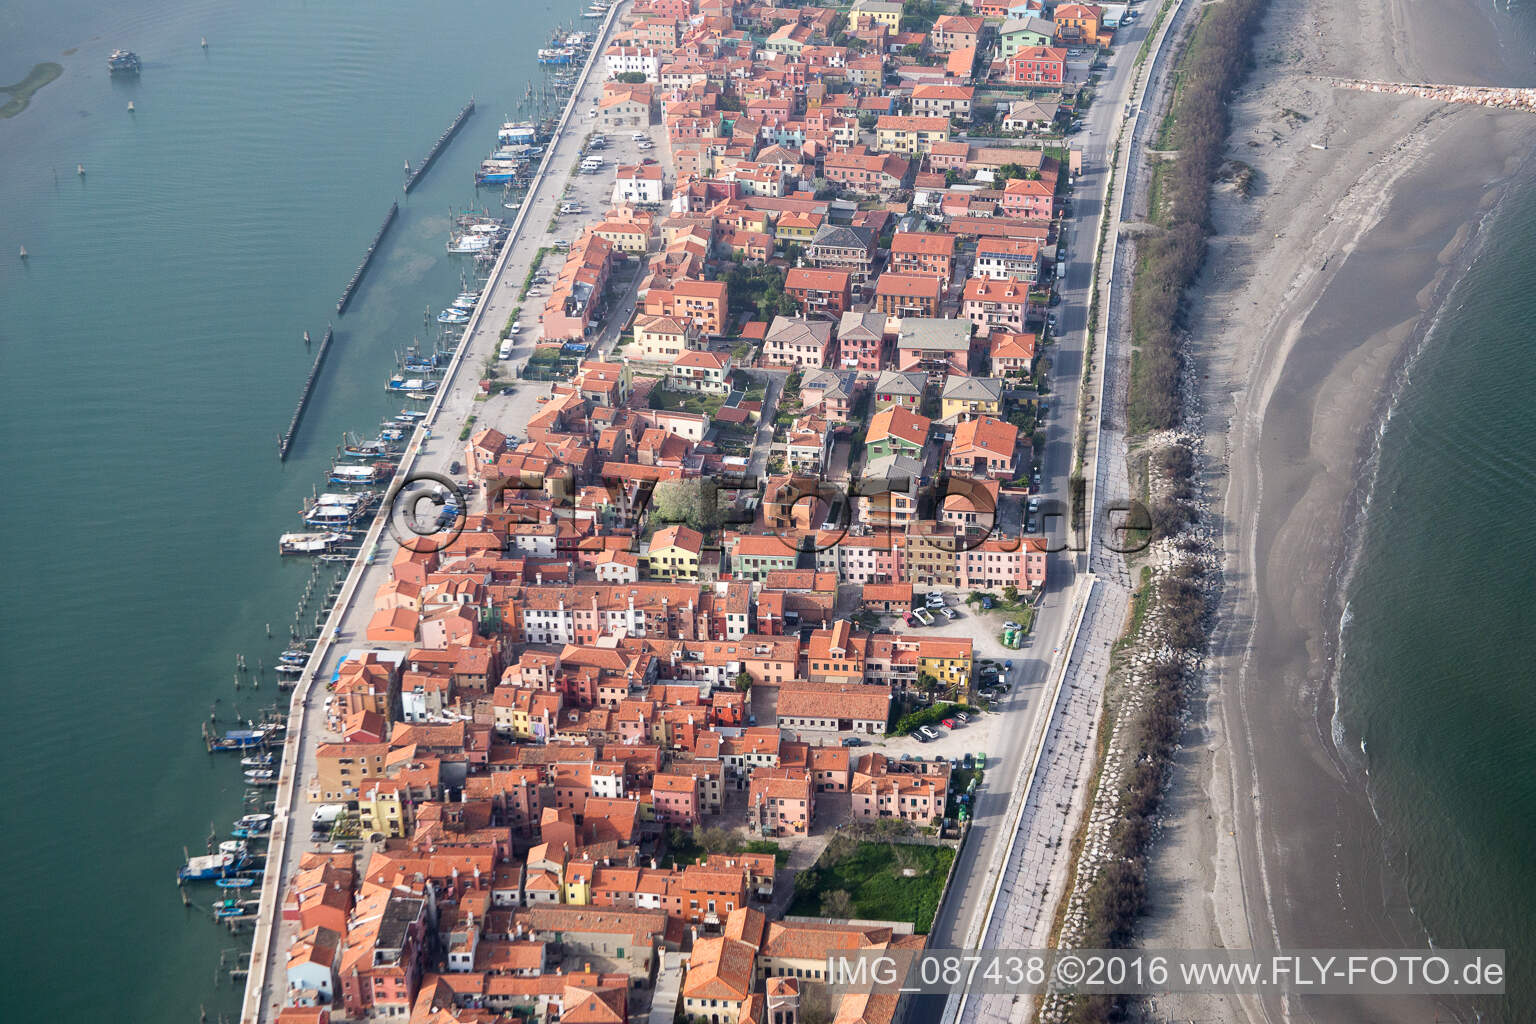 Settlement area in the district Pellestrina in Venedig in Venetien, Italy seen from above